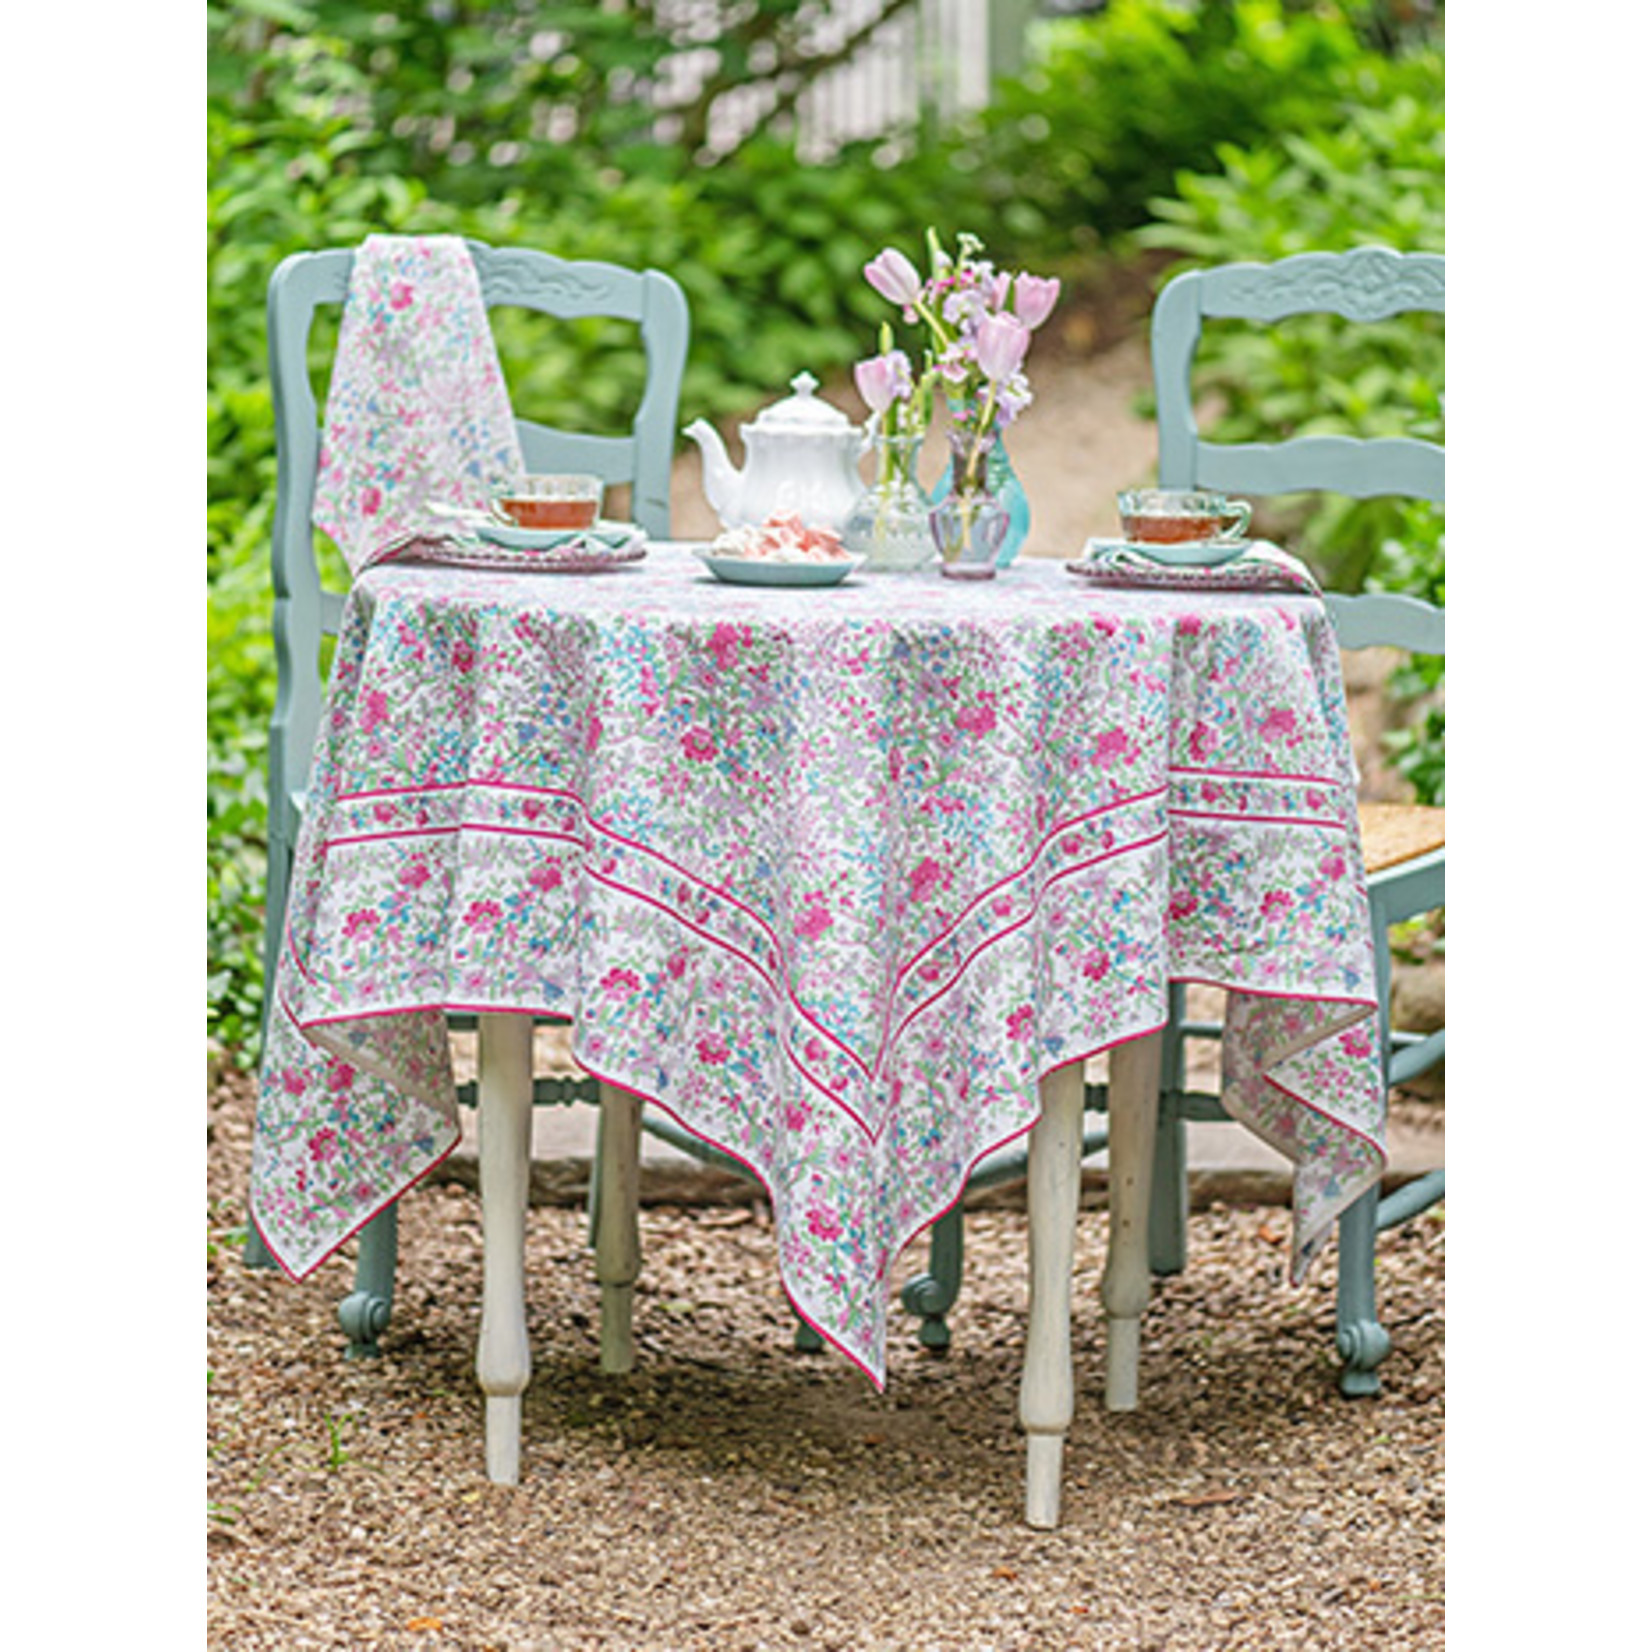 April Cornell Penelope Tablecloth Pastel 36x36